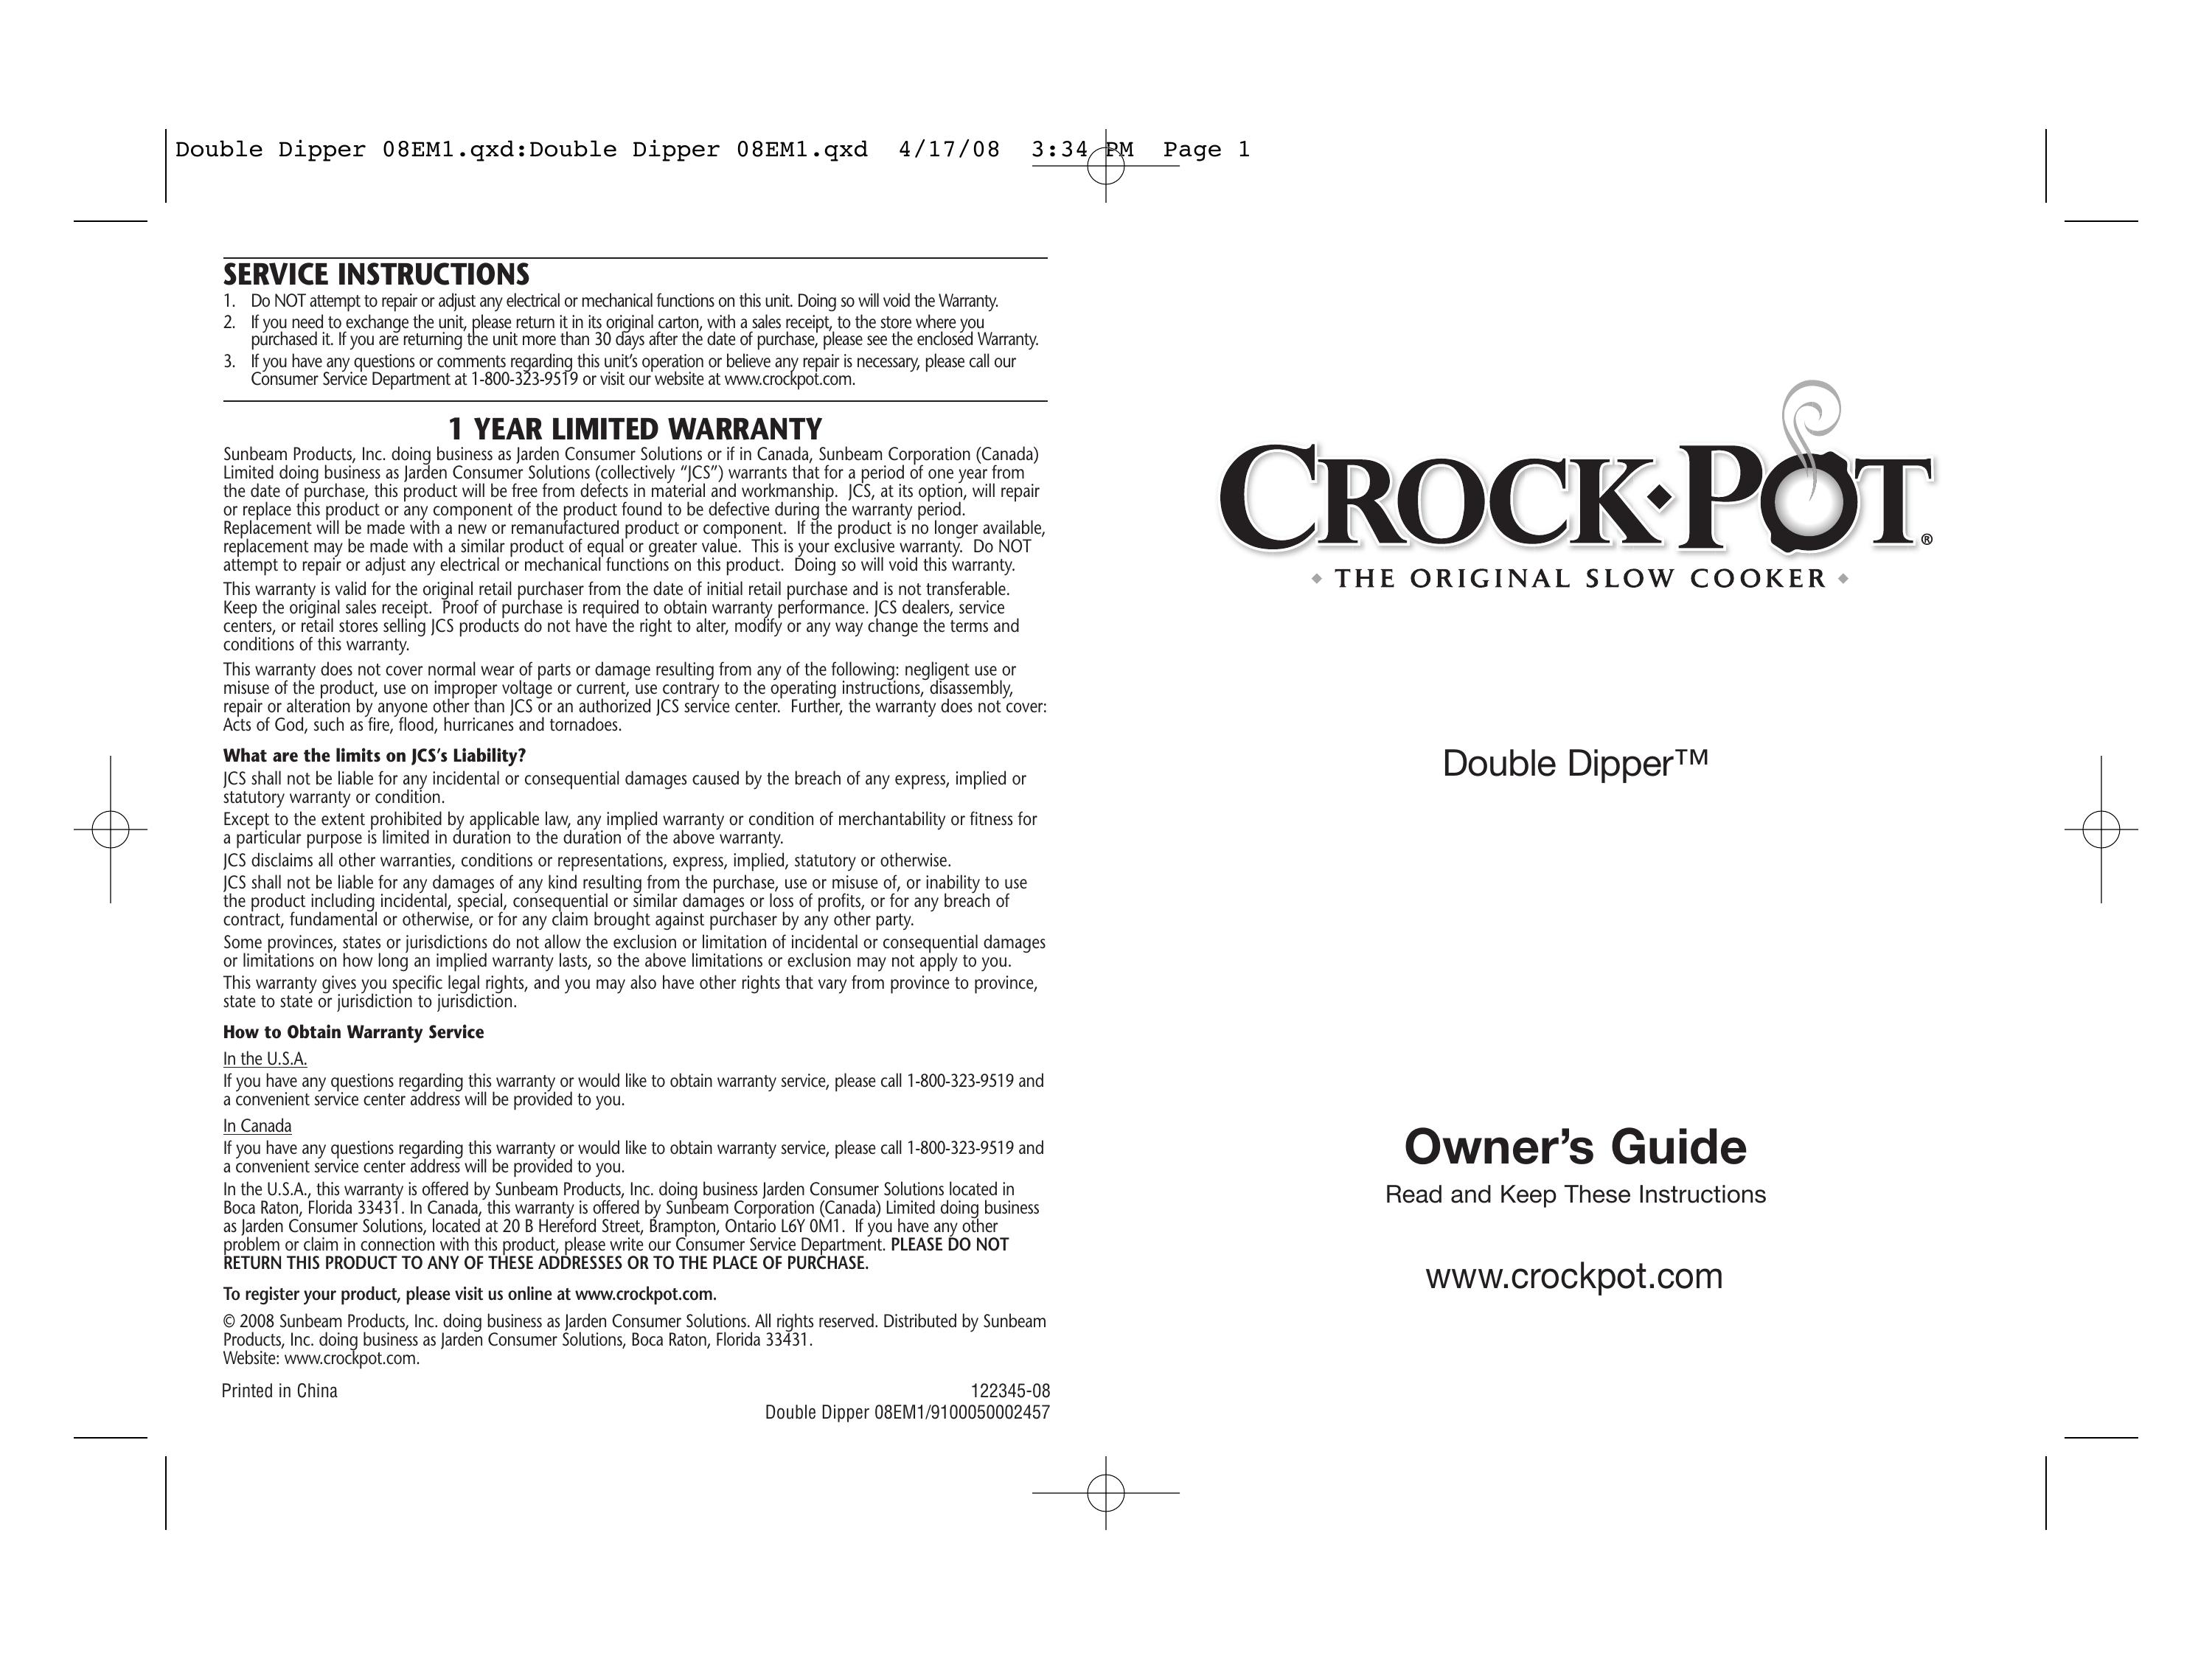 Crock-Pot Double Dipper Slow Cooker User Manual